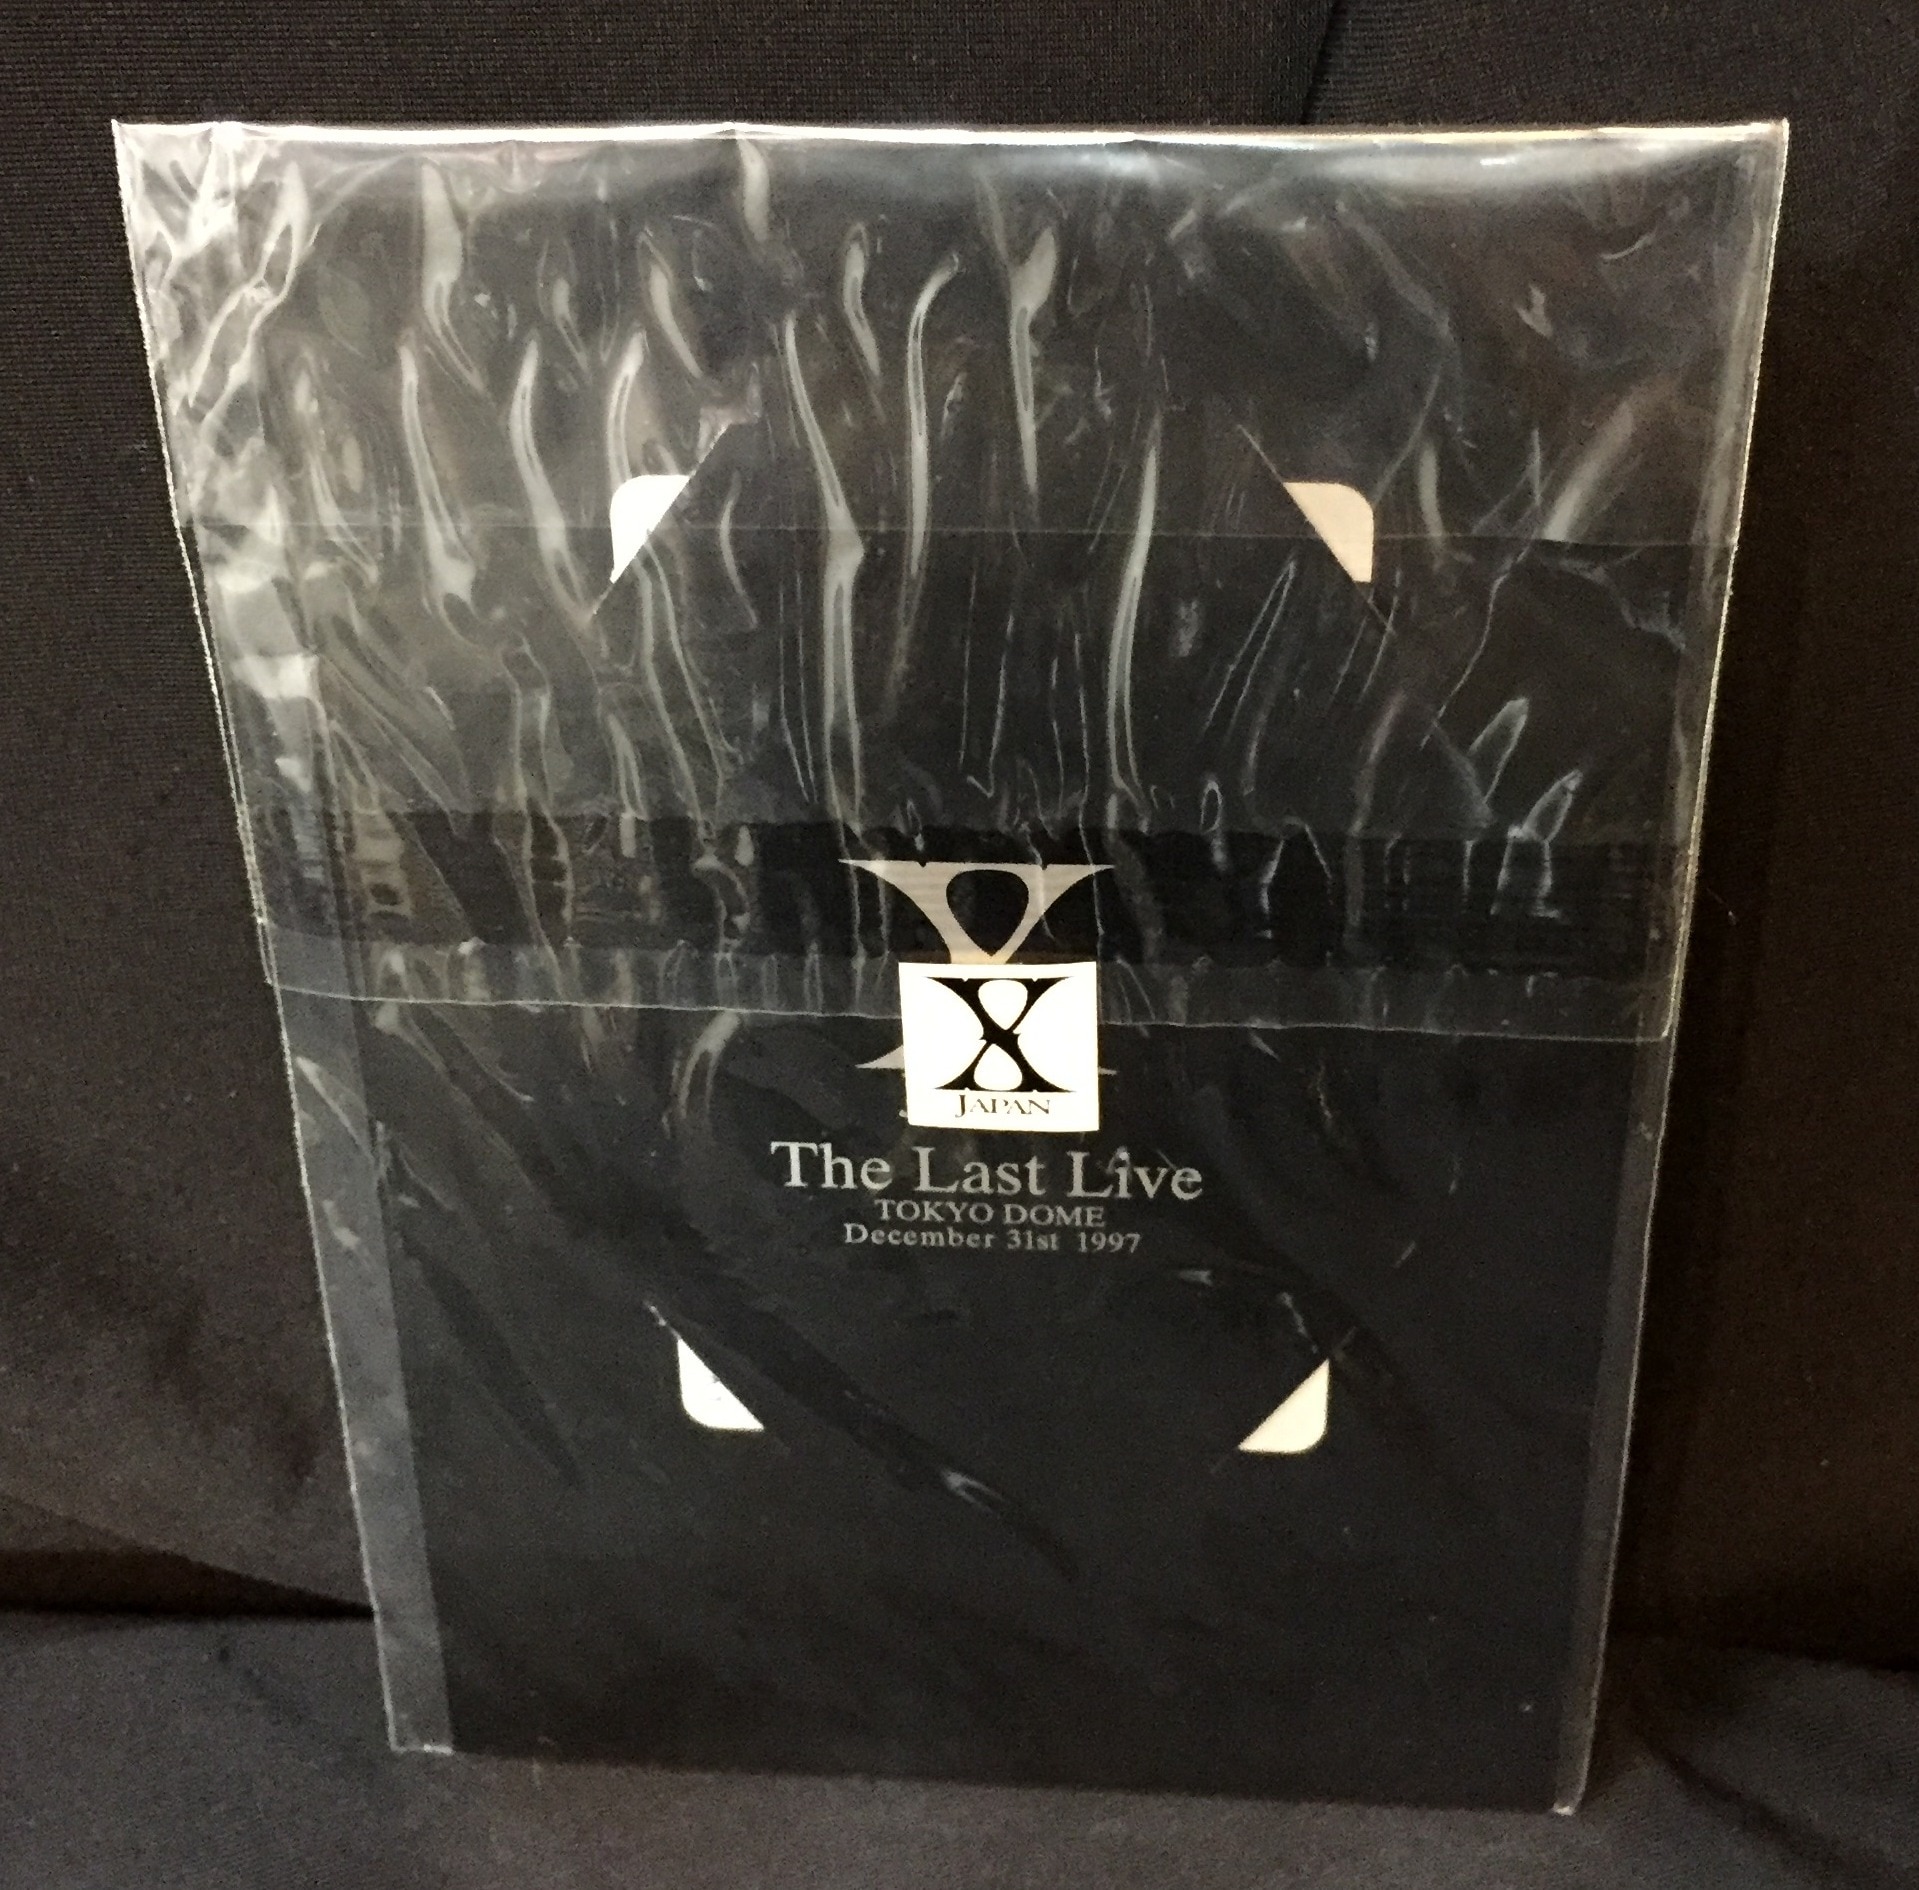 X JAPAN YOSHIKI The Last Live TOKYO DOME December 31st 1997 